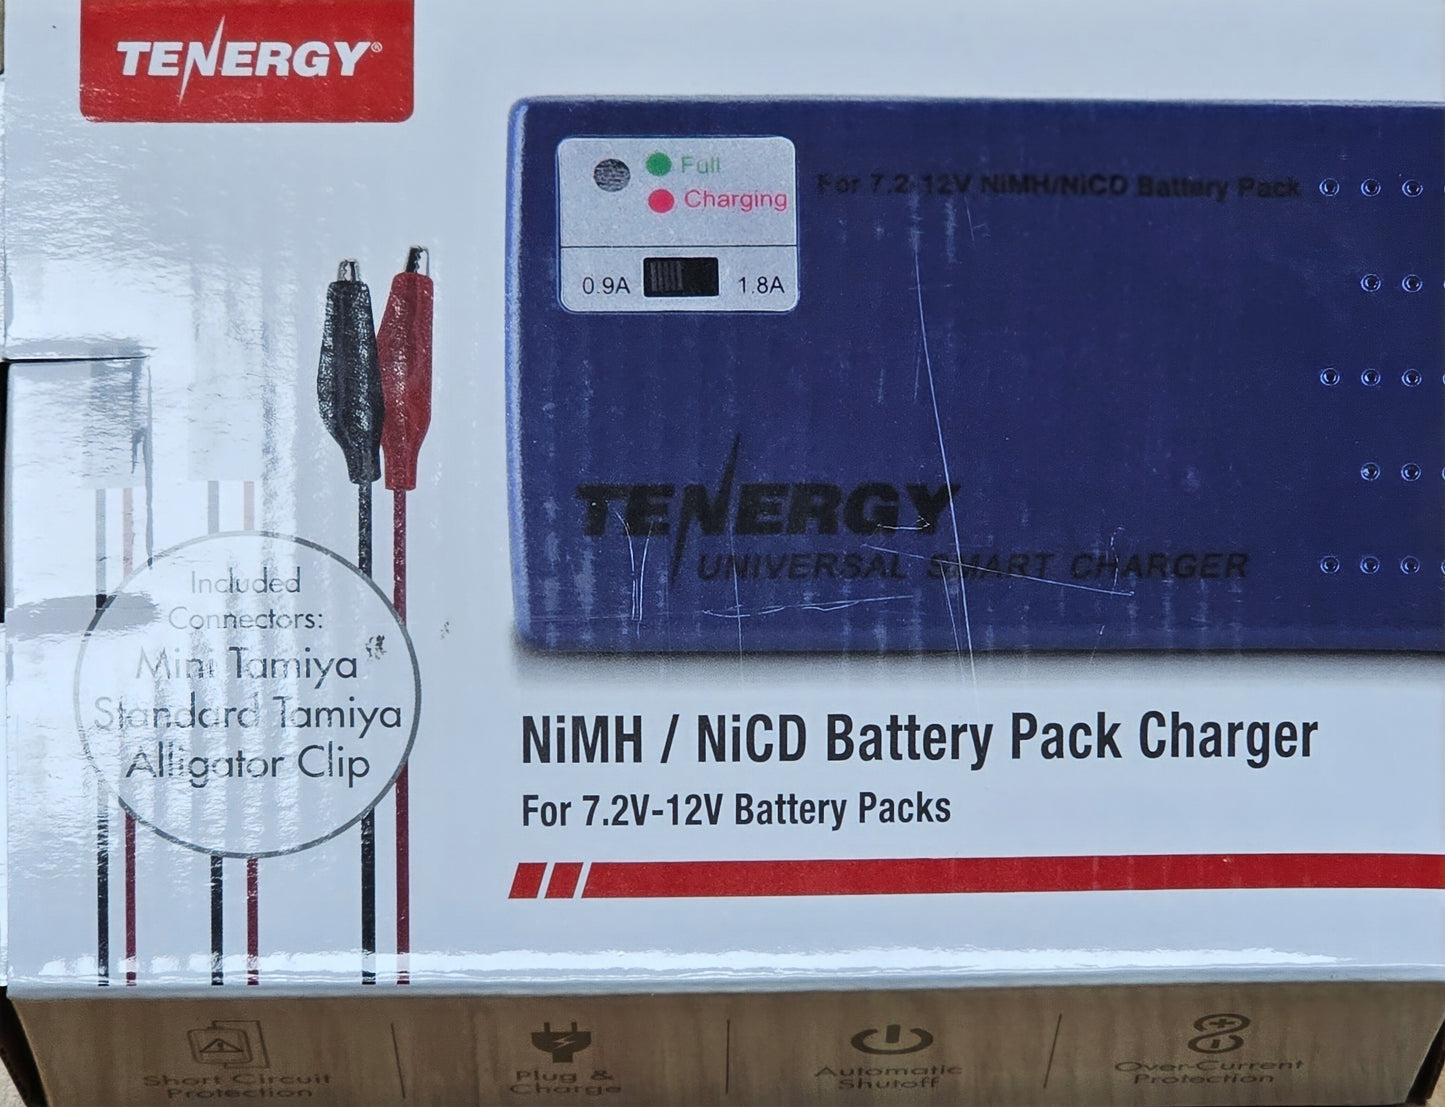 Tenergy Universal Smart Charger for 7.2-12V NiMh/NiCad Battery packs